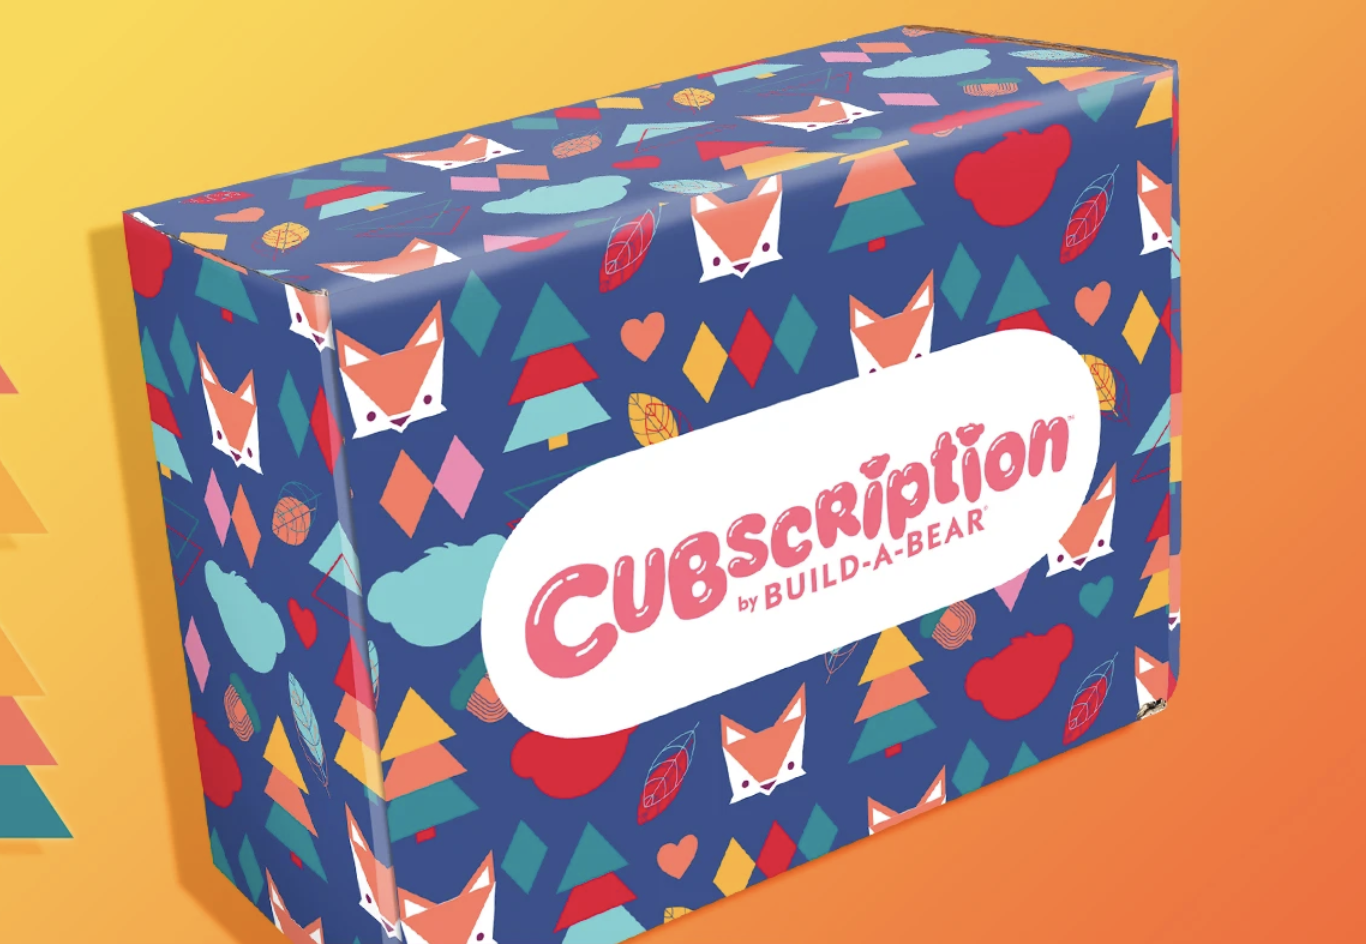 Cubscription by Build-A-Bear Fall 2021 Box Theme Spoiler